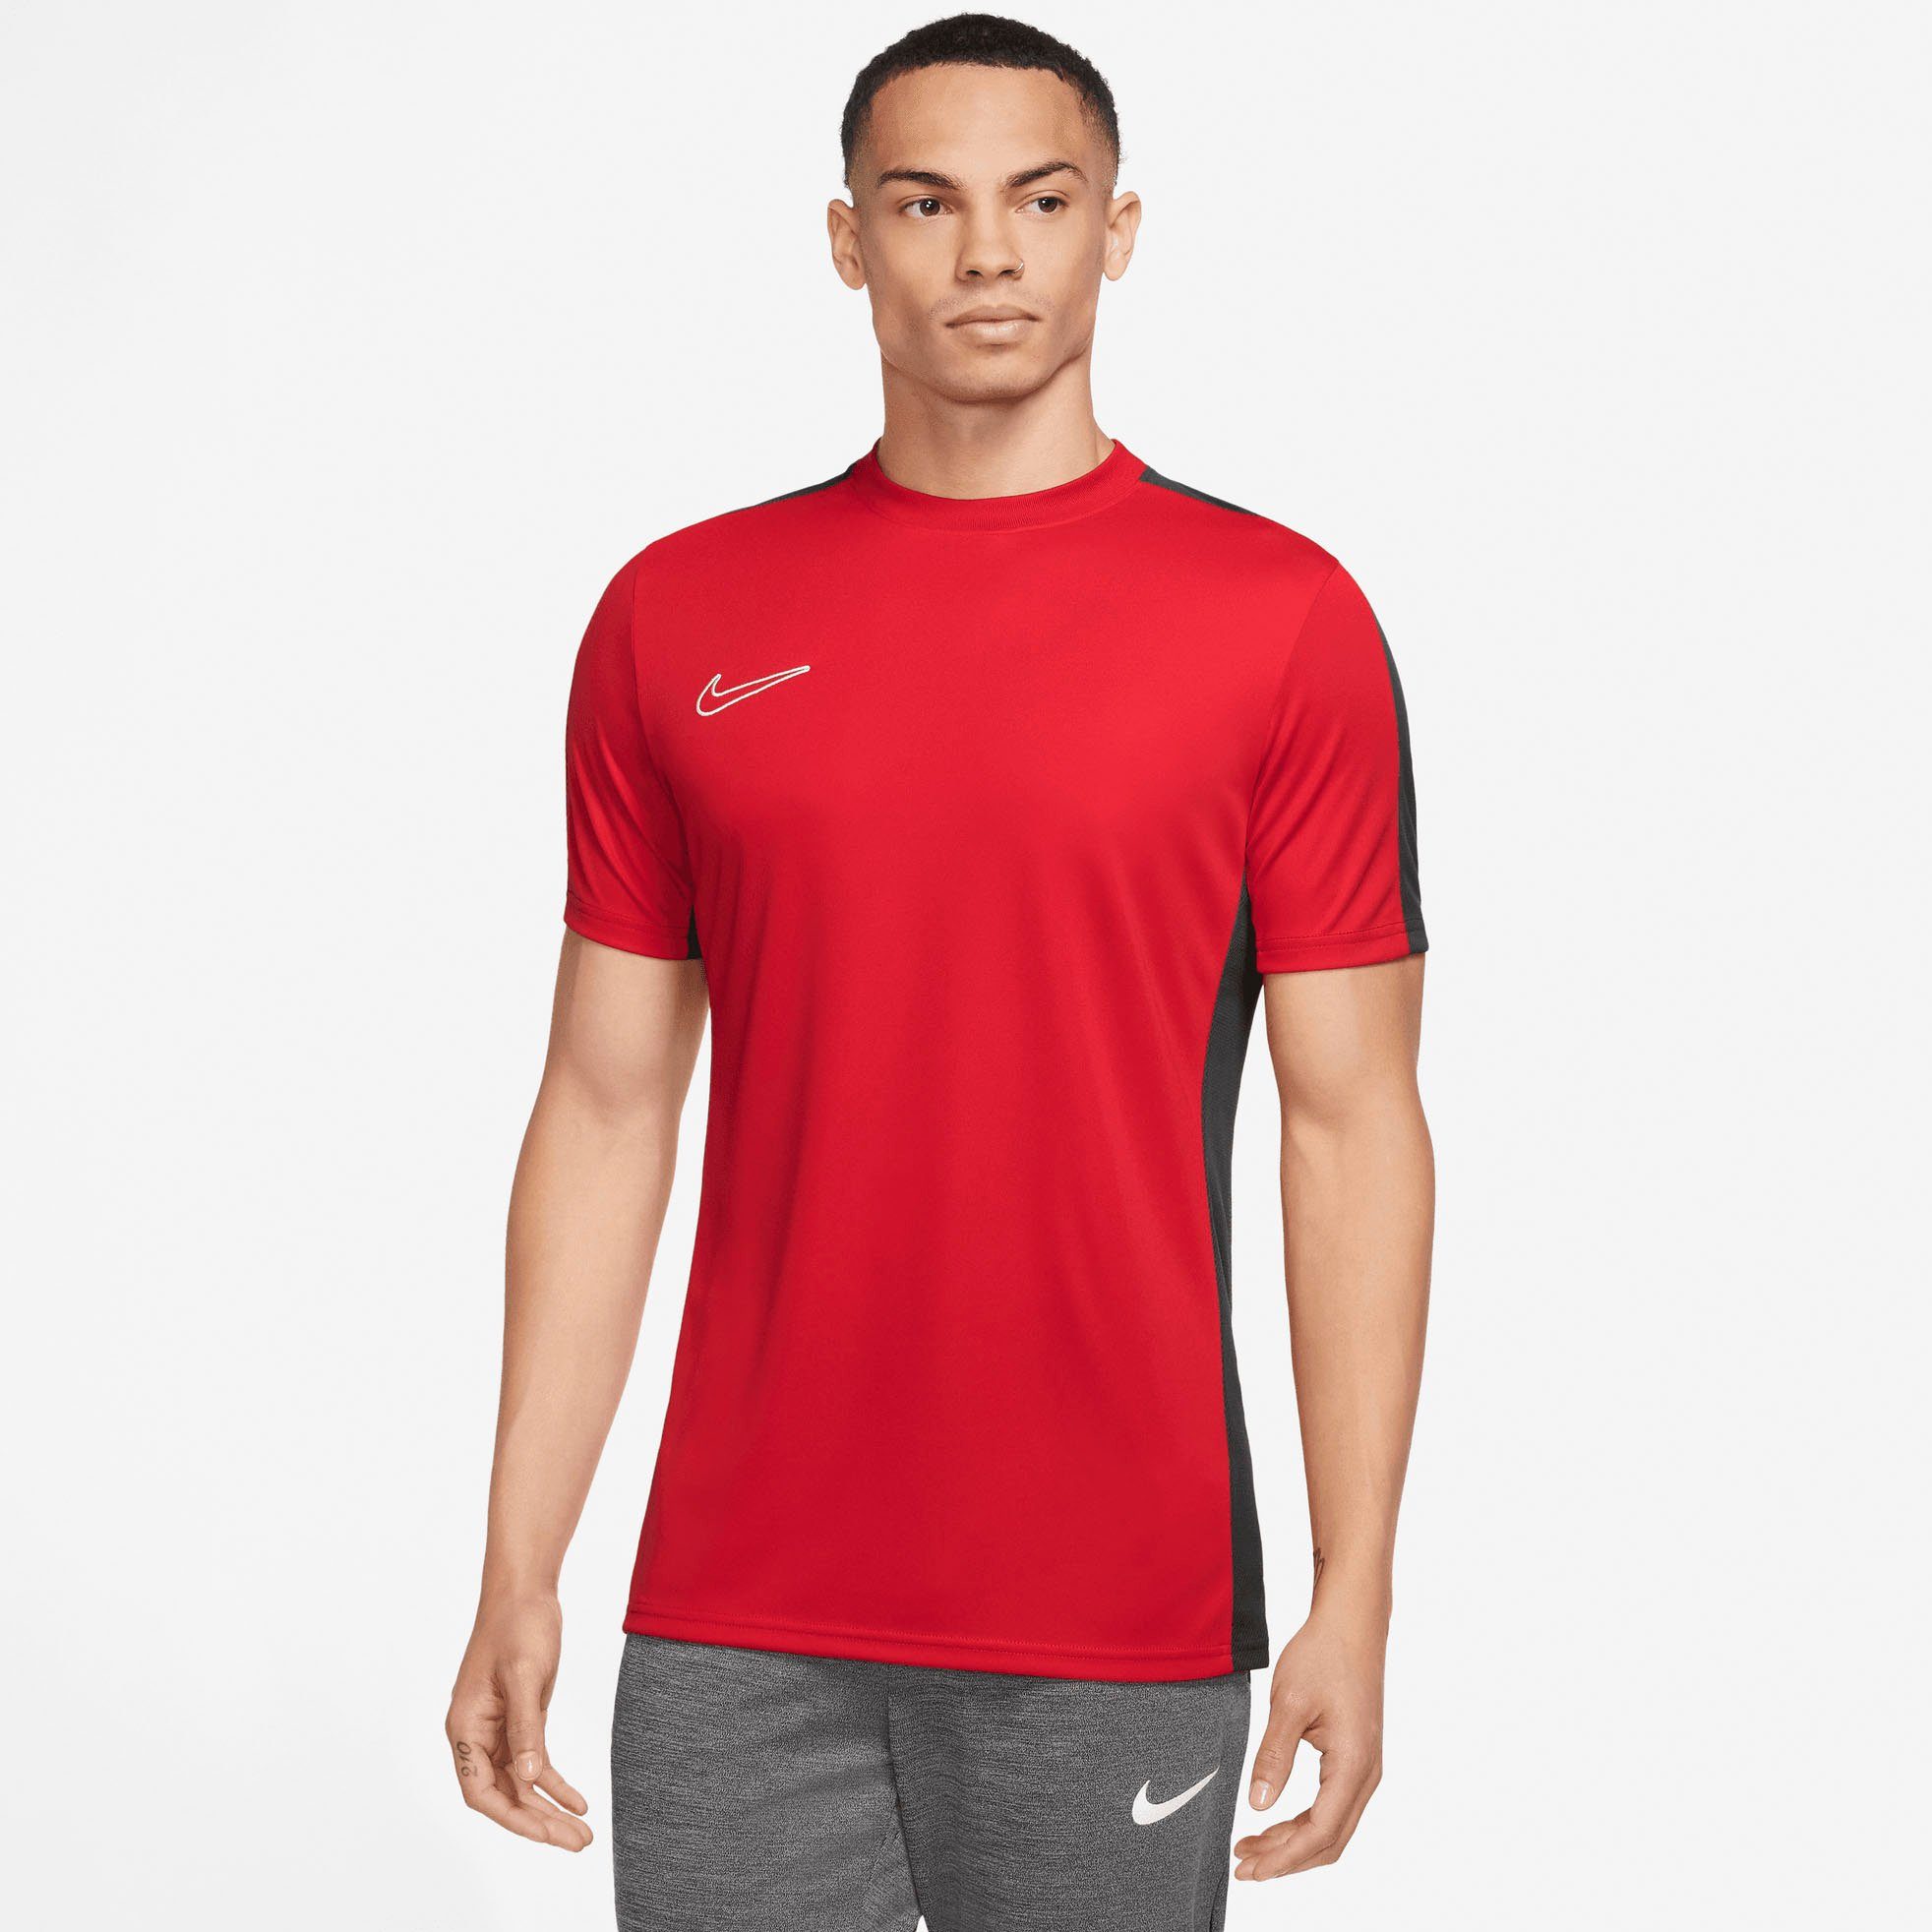 Academy RED/BLACK/WHITE Funktionsshirt Men's Dri-FIT Top Nike Short-Sleeve UNIVERSITY Soccer